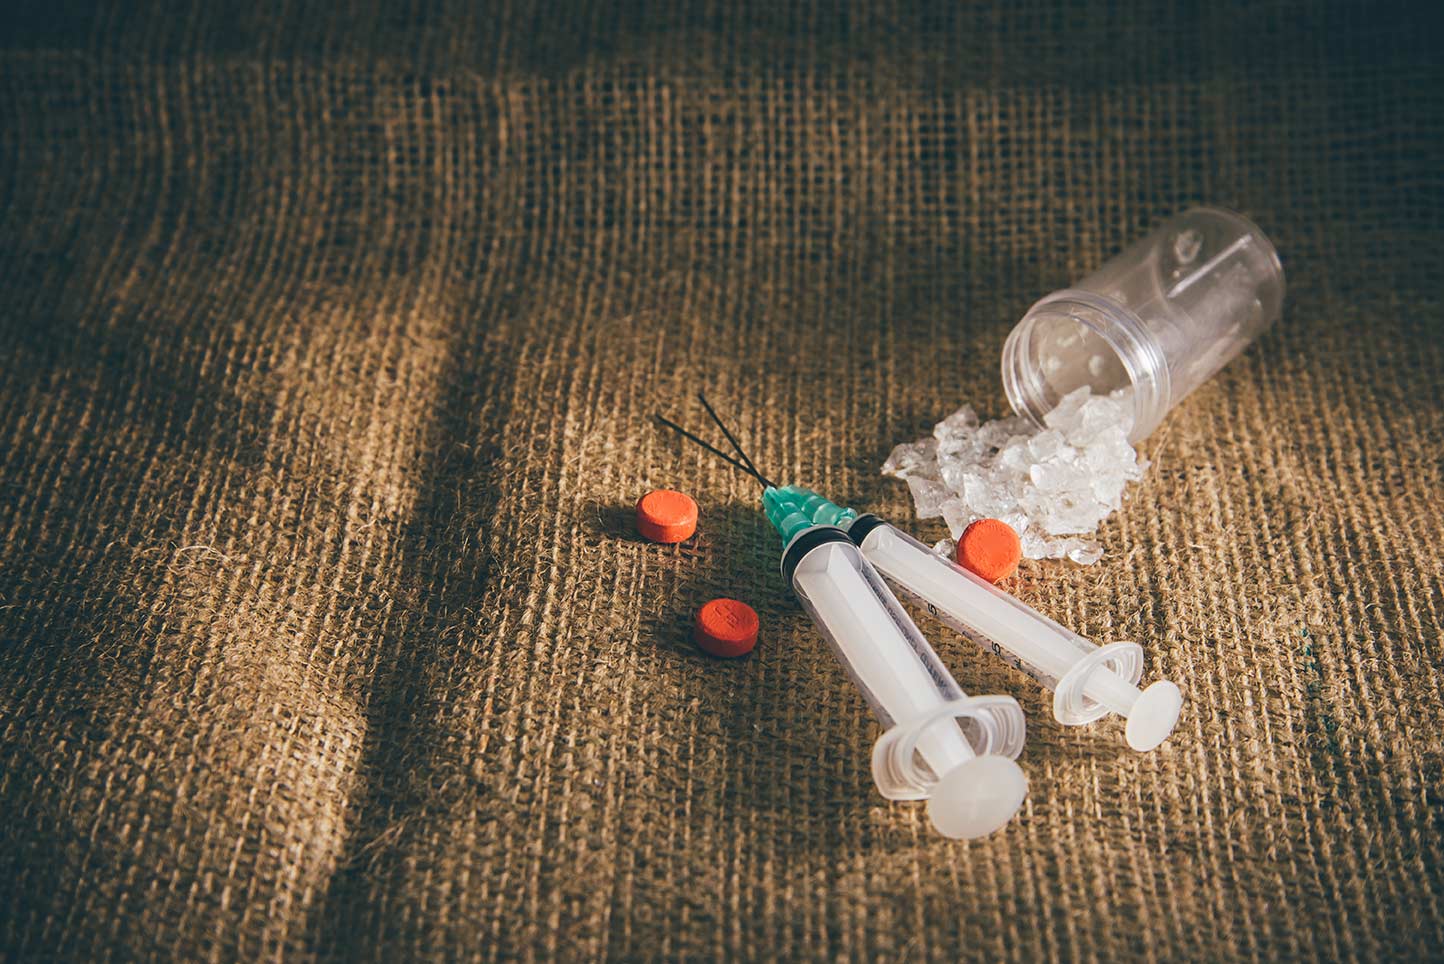 methamphetamine and drug addiction, needles